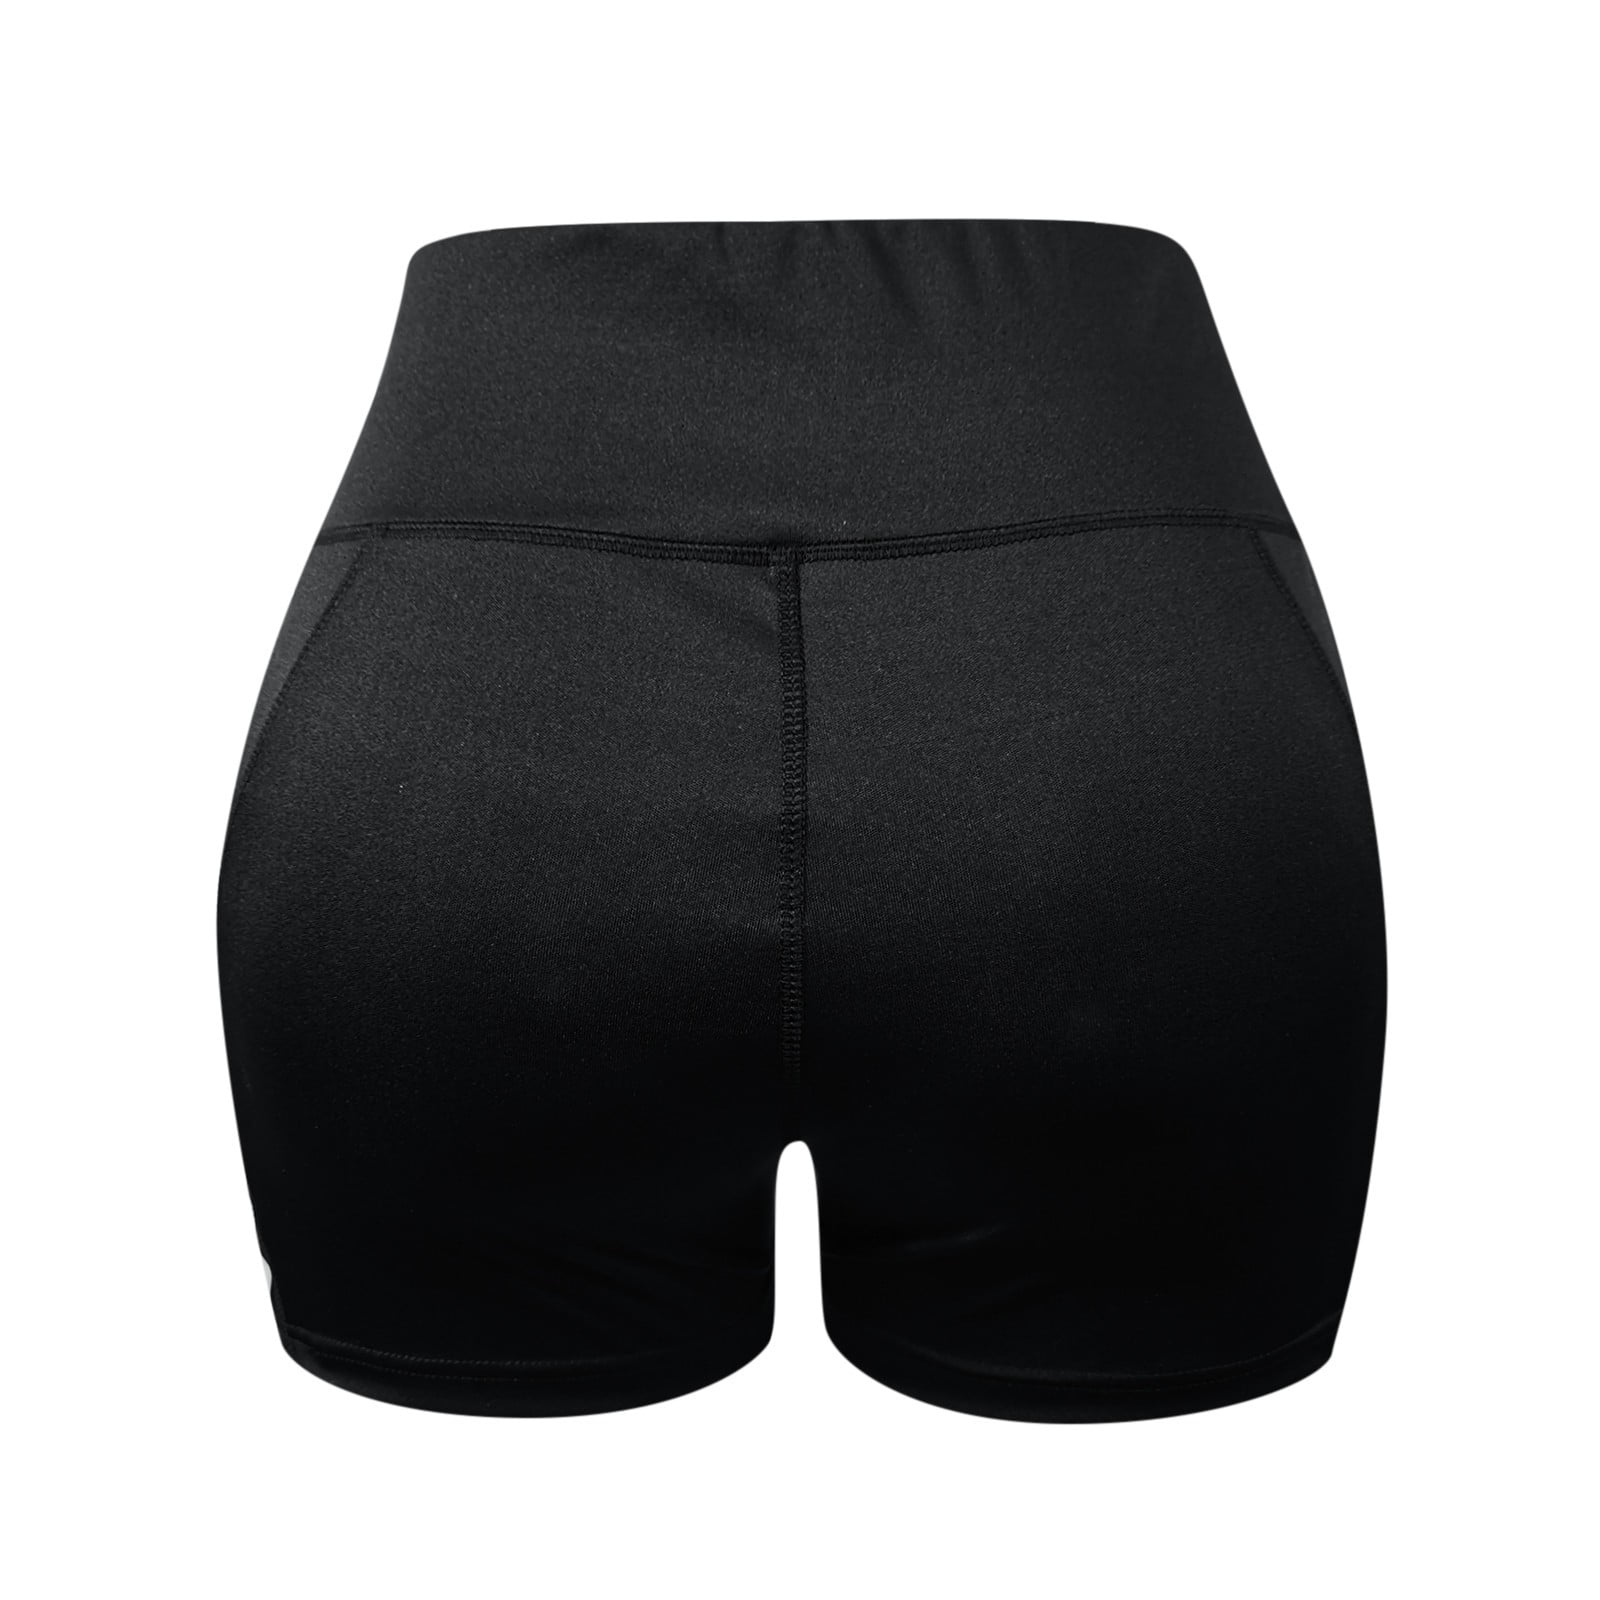 MRULIC yoga shorts for women Women's Casual Sport Solid Fashion High Waist  Leggings Yoga Shorts Black + L 